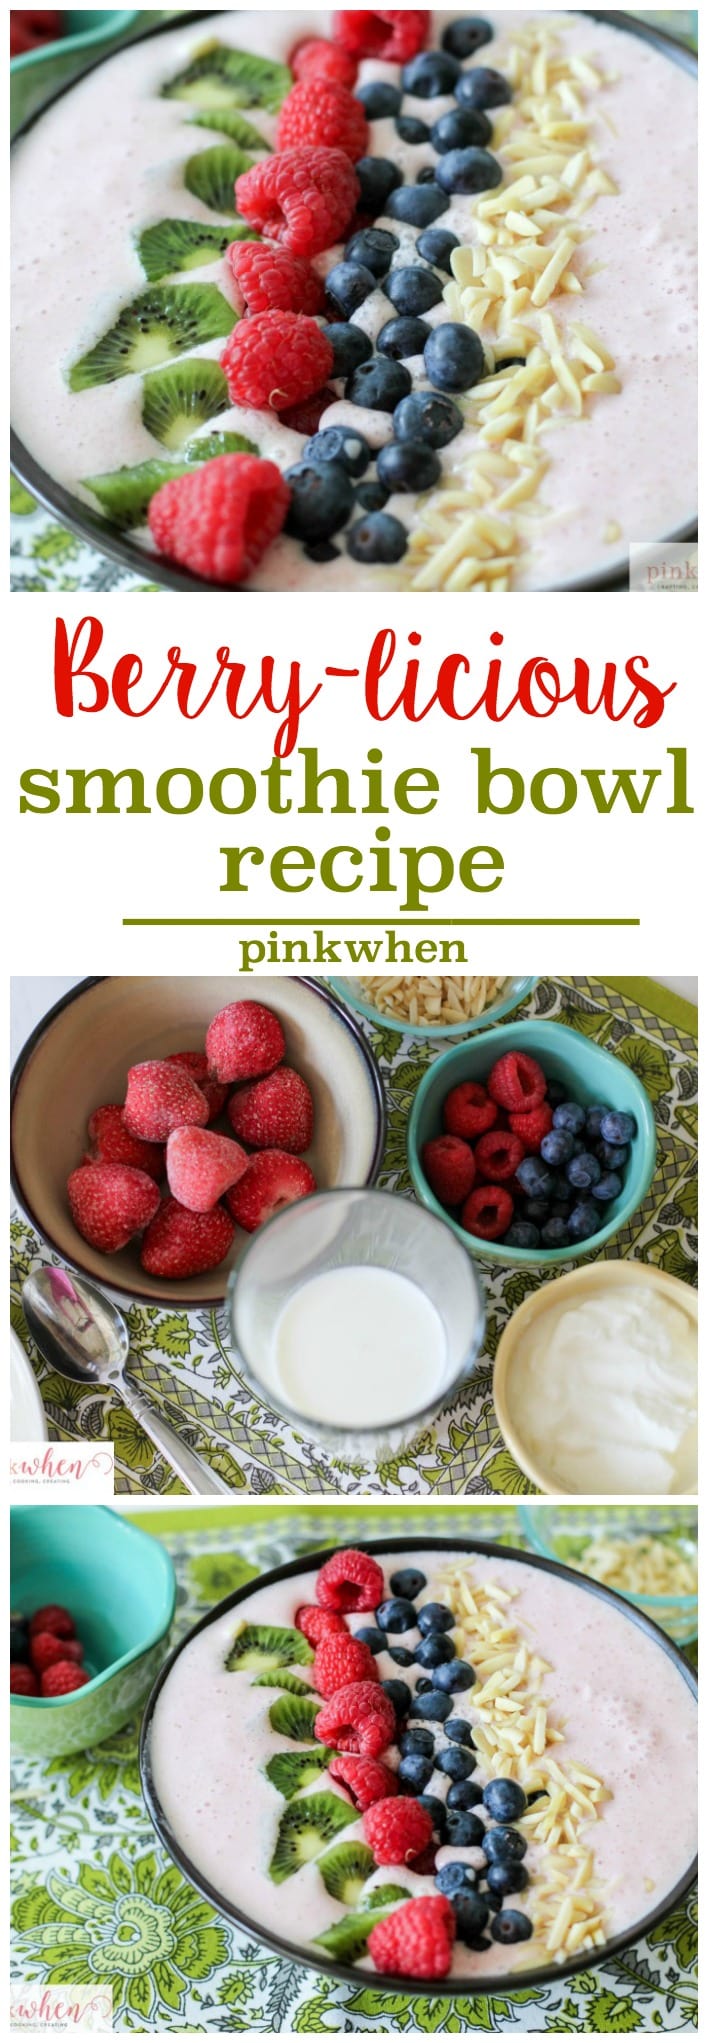 Berry licious Smoothie Bowl Recipe   PinkWhen